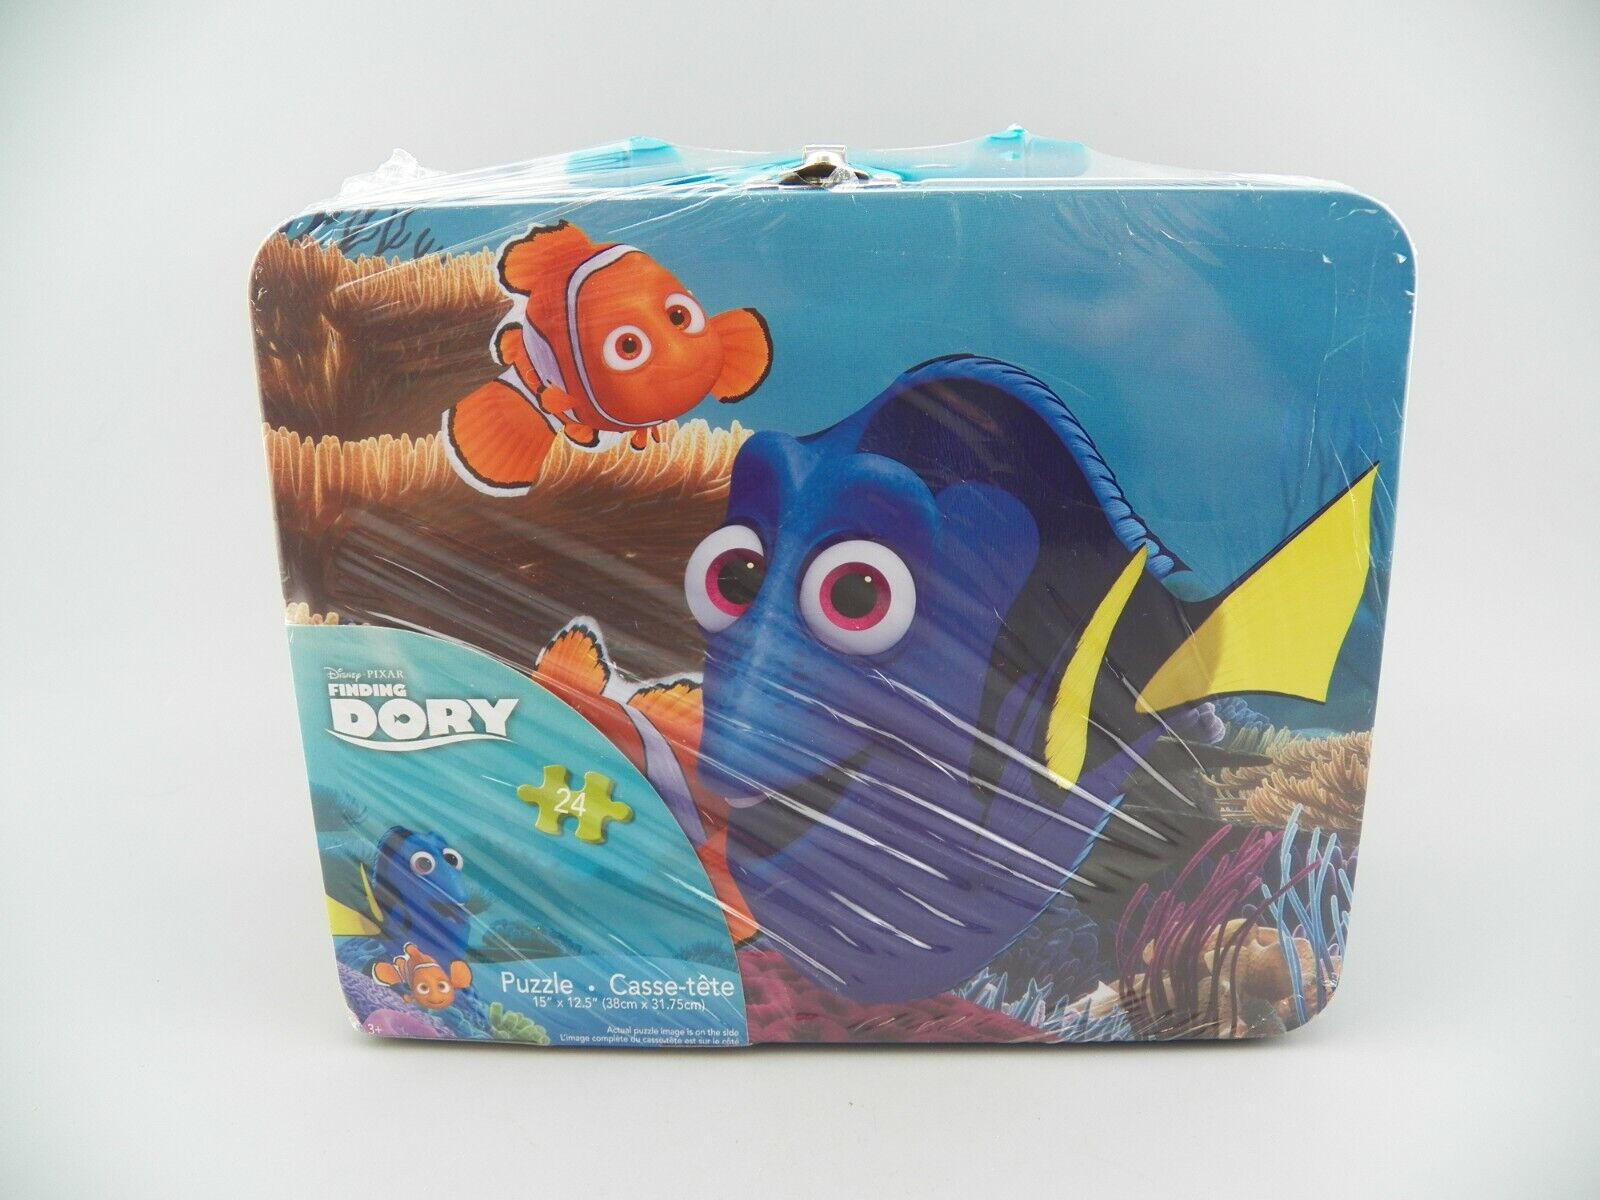 Disney Pixar FINDING DORY 24 Piece Puzzle Tin Box Lunch Box Kids USA NEW 